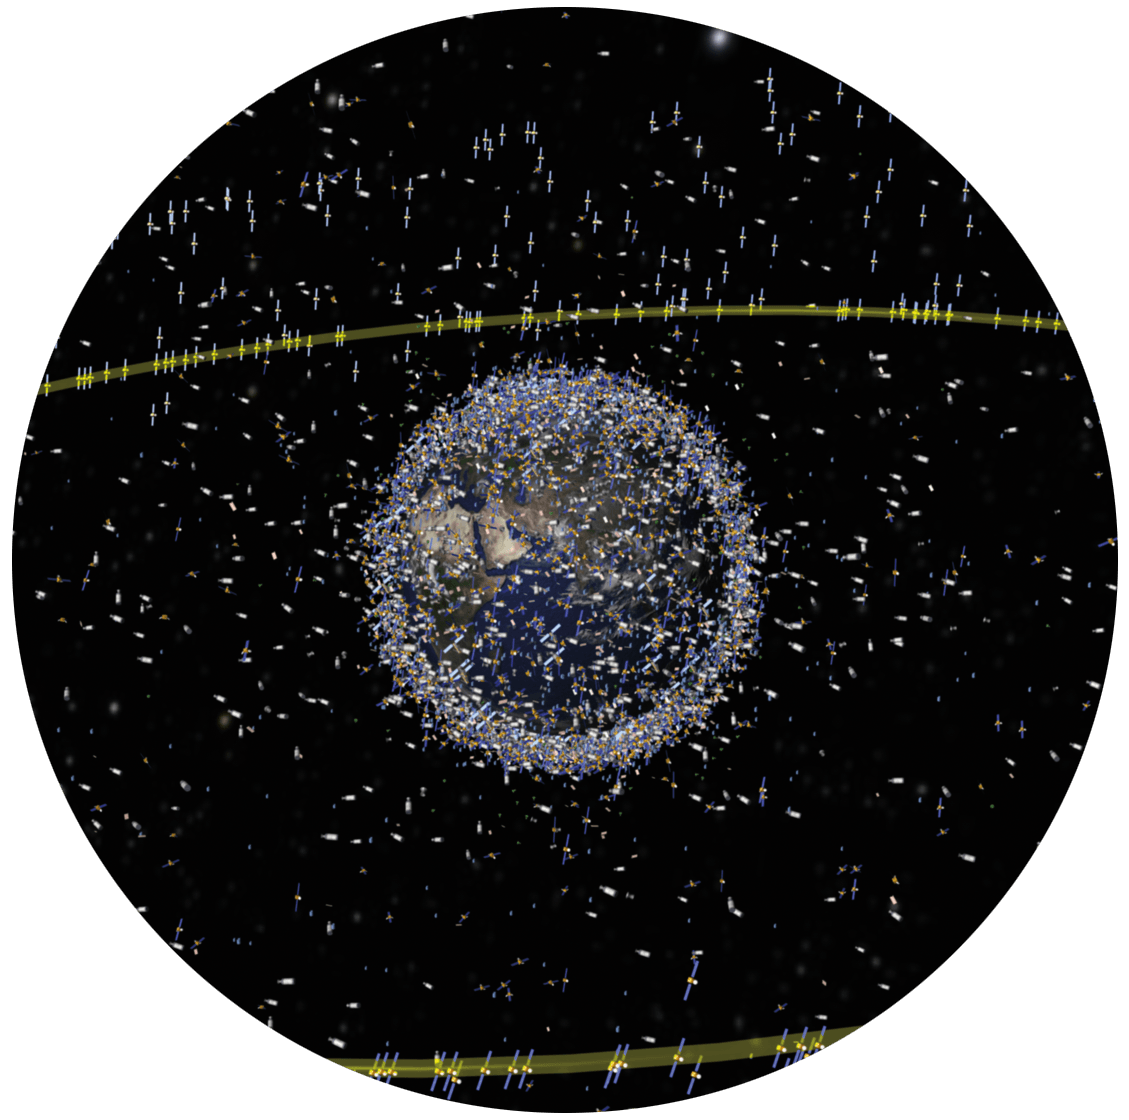 ESA Image showing space satellites in orbit